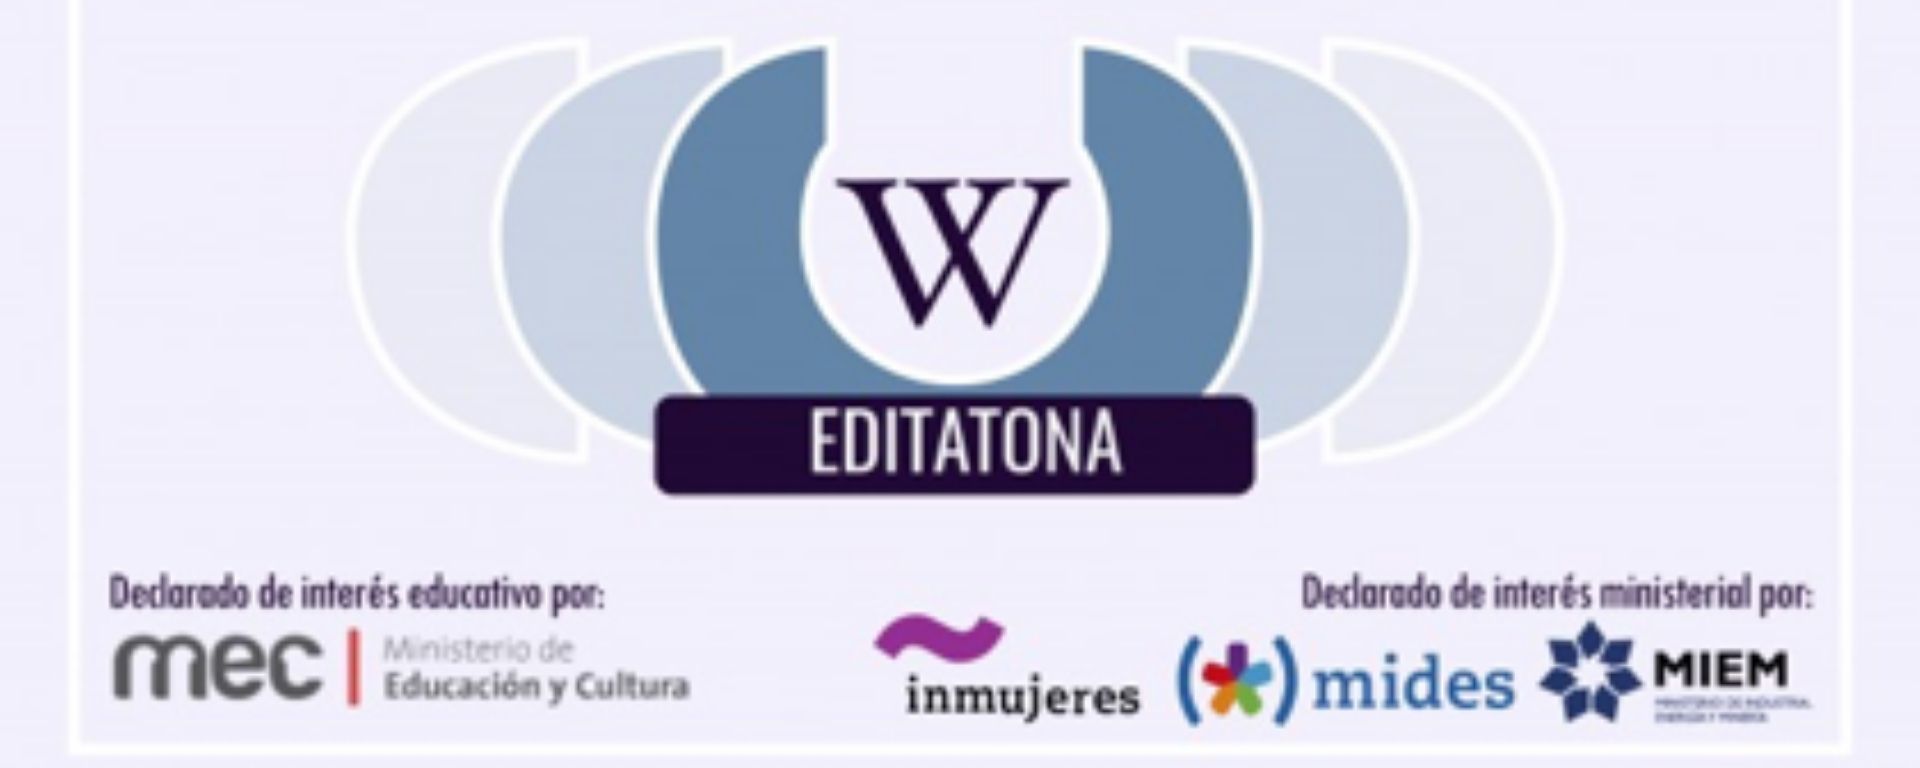 Flyer del evento: "Editatona"